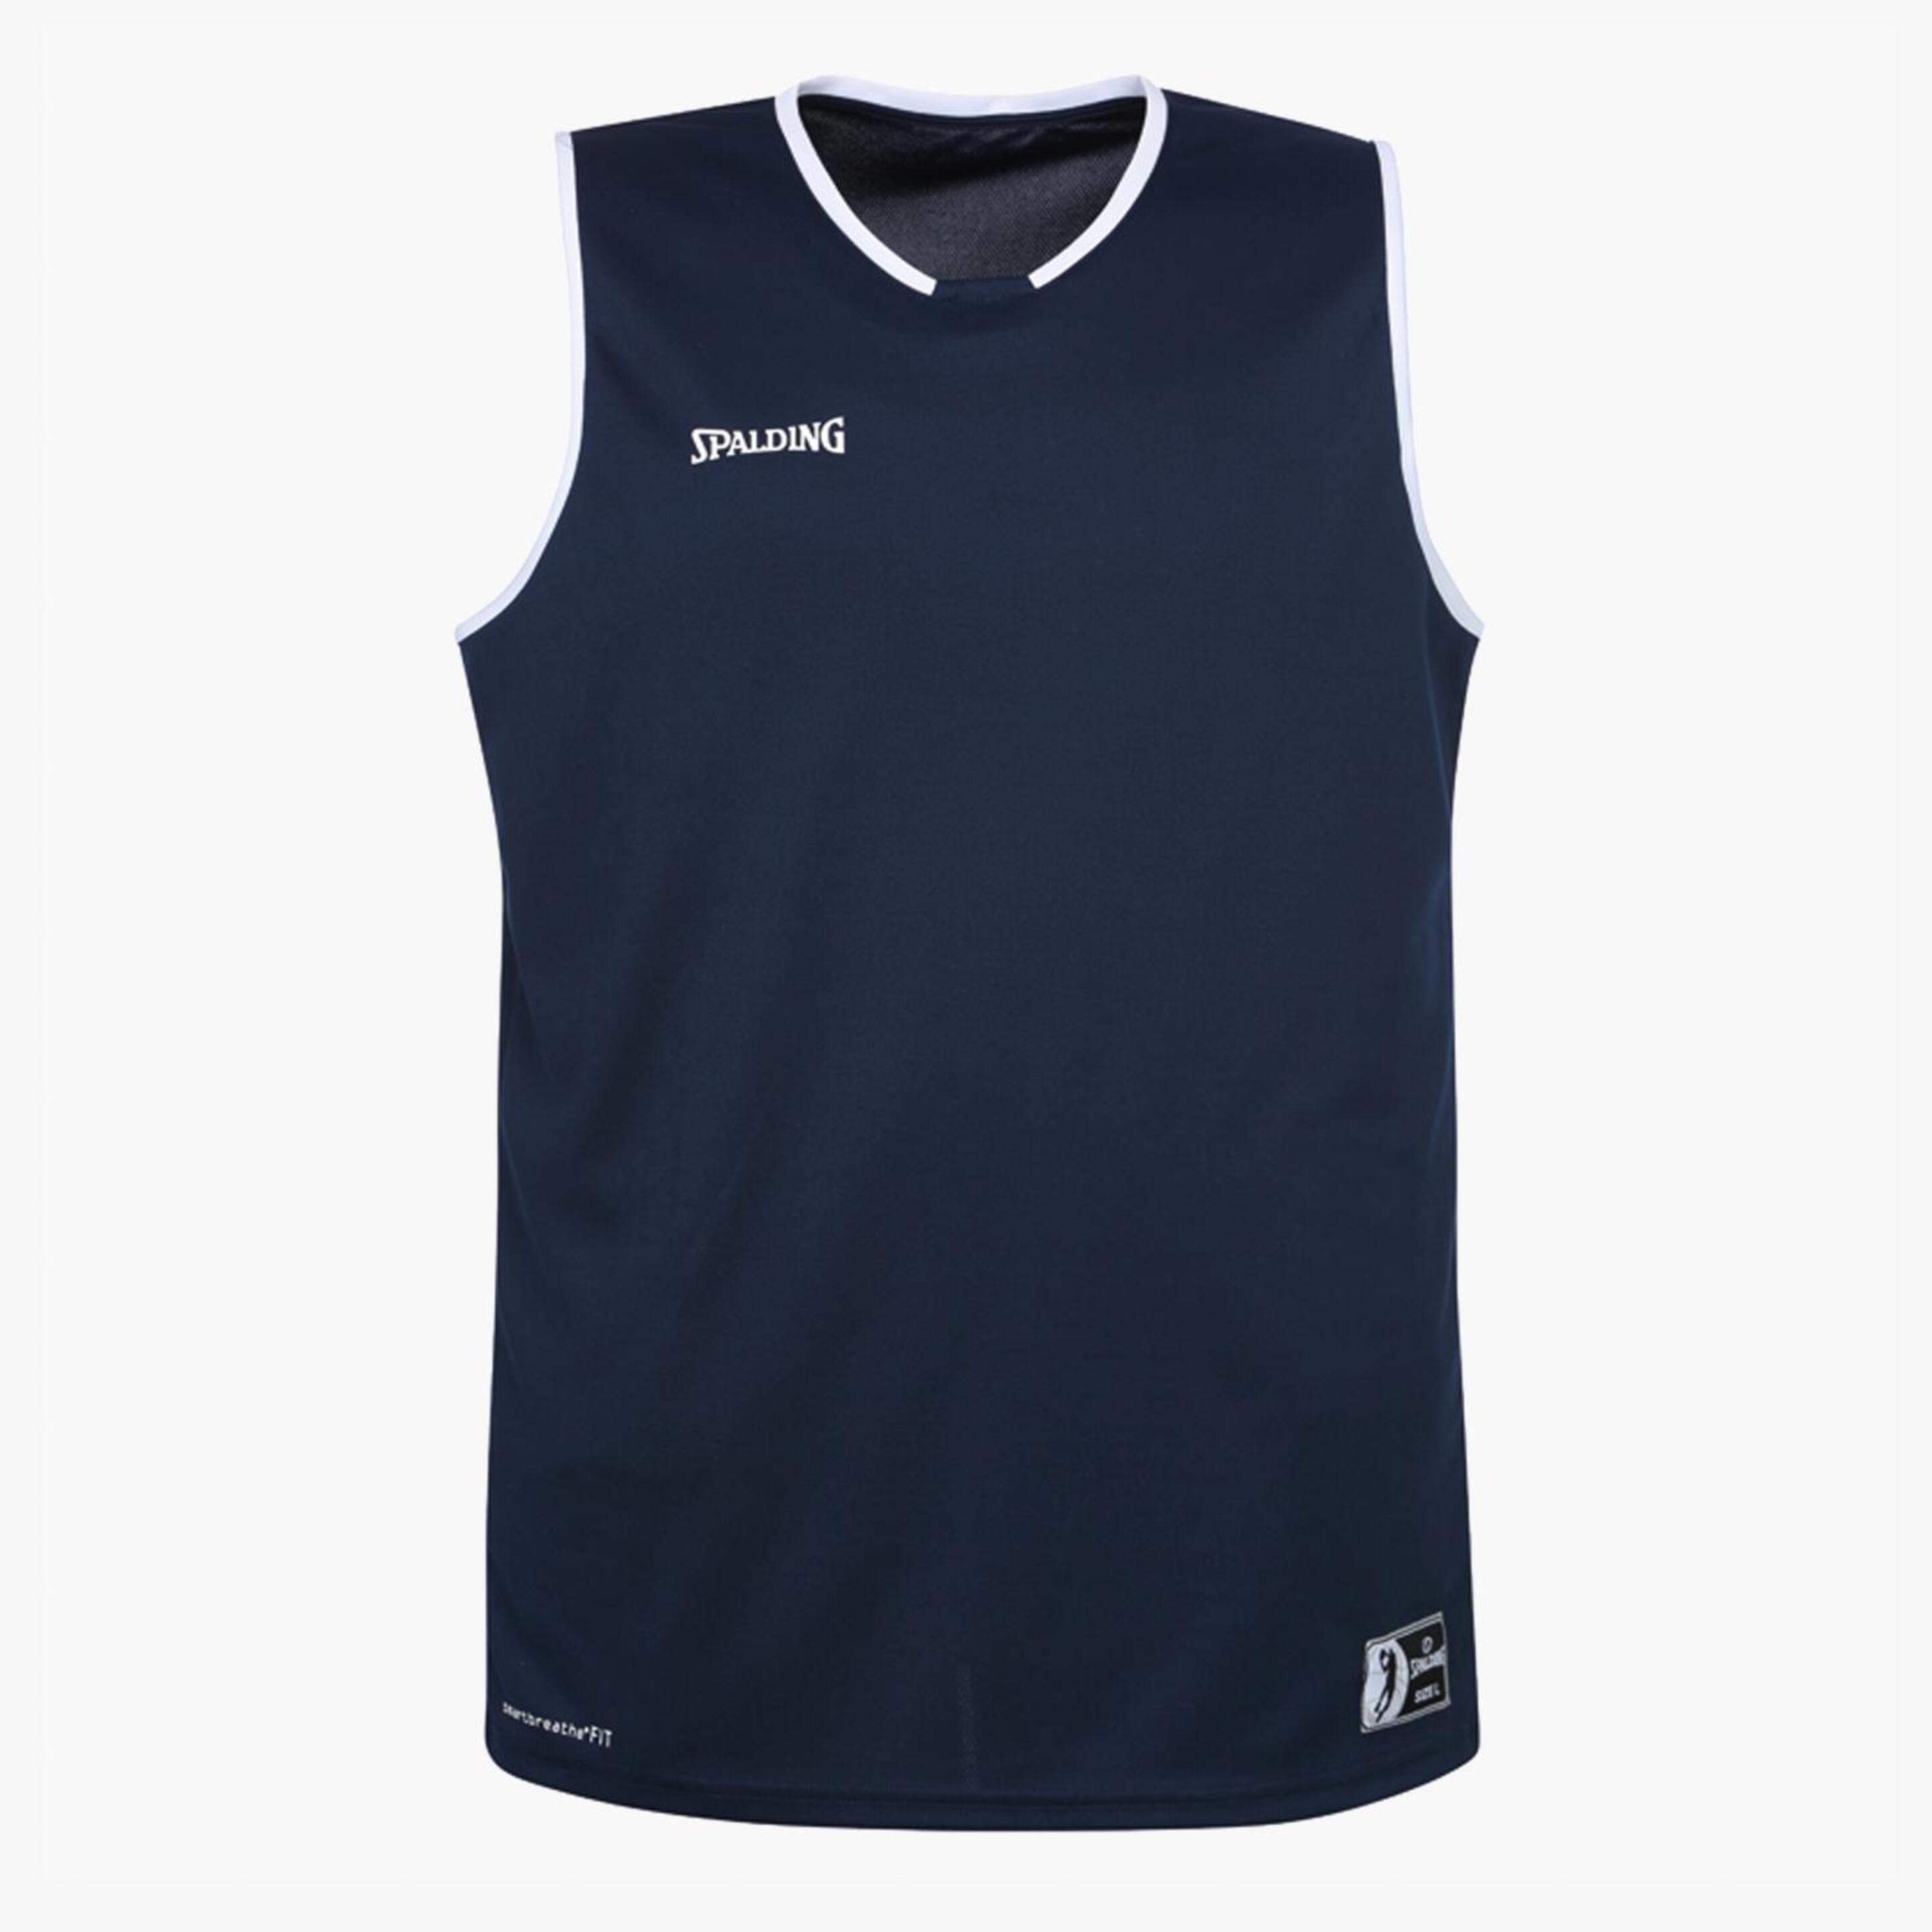 Spalding Move - Marino - Camiseta Baloncesto Hombre  MKP